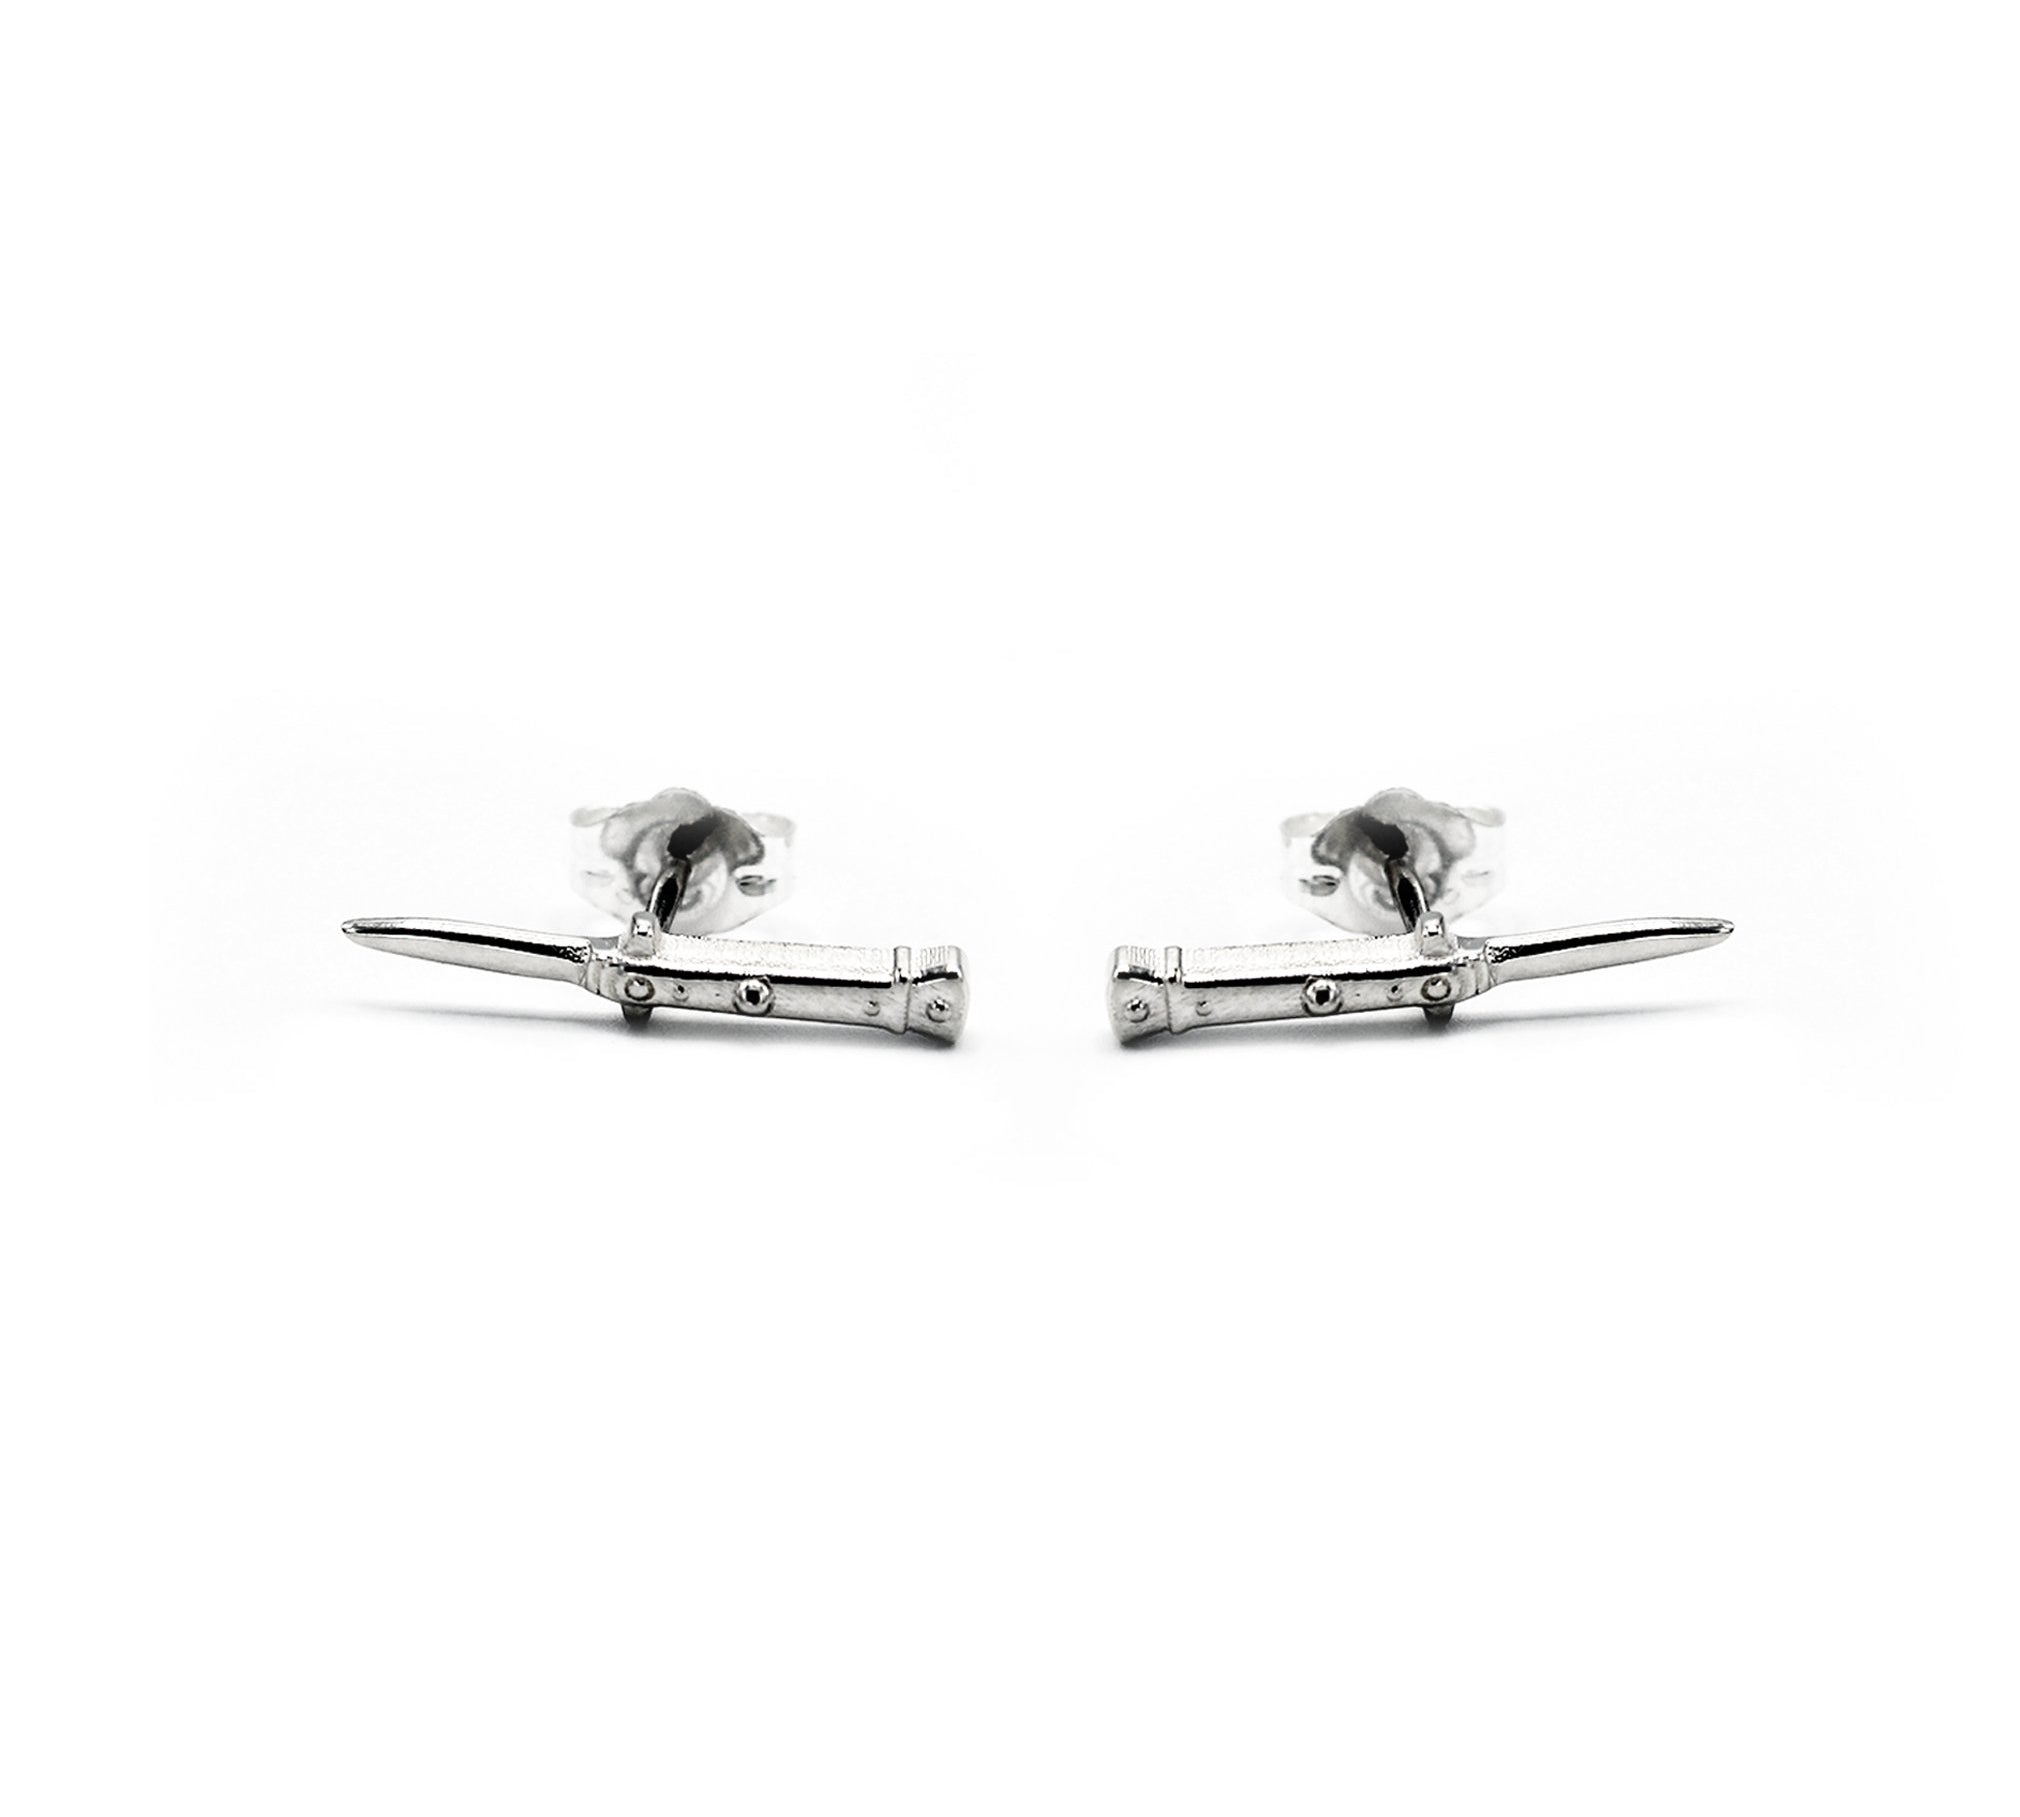 Sterling Silver womens earrings, earrings in the shape of a switchblade